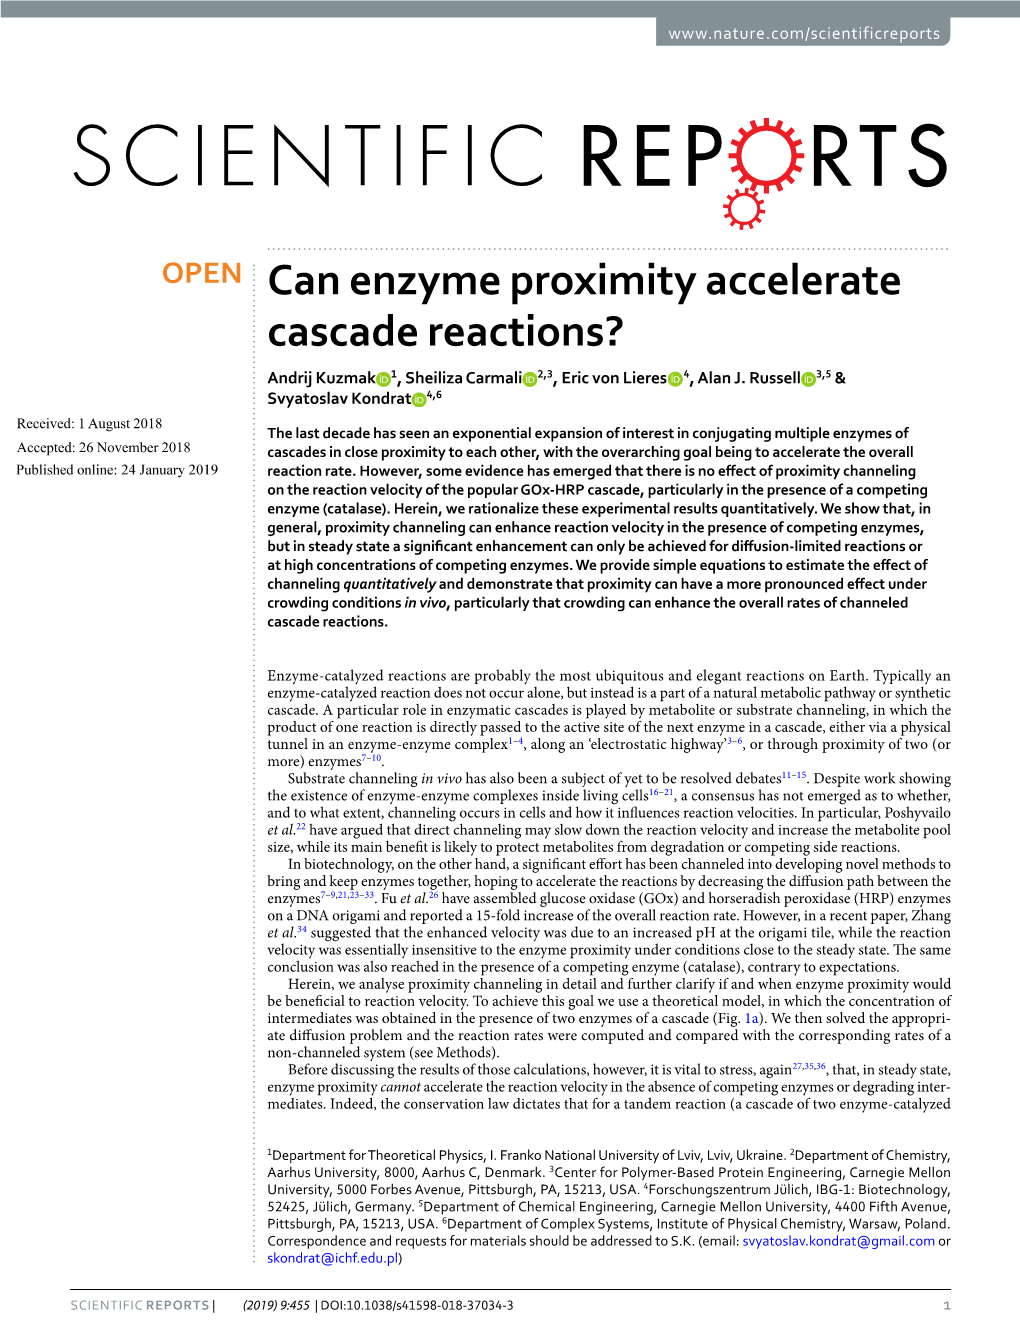 Can Enzyme Proximity Accelerate Cascade Reactions? Andrij Kuzmak 1, Sheiliza Carmali 2,3, Eric Von Lieres 4, Alan J